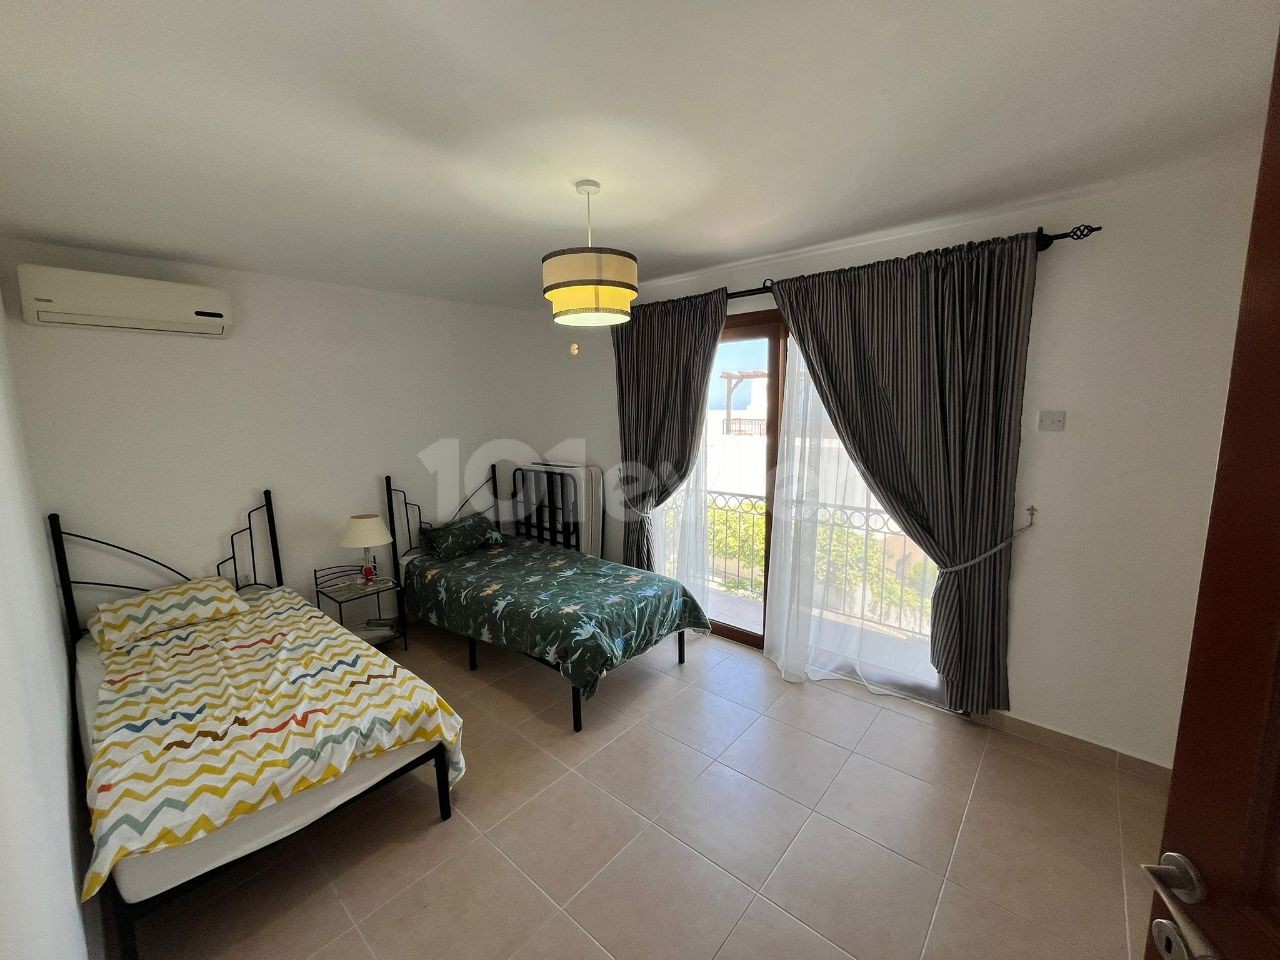 2 bedroom villa for rent in Karmi, Selvi village 